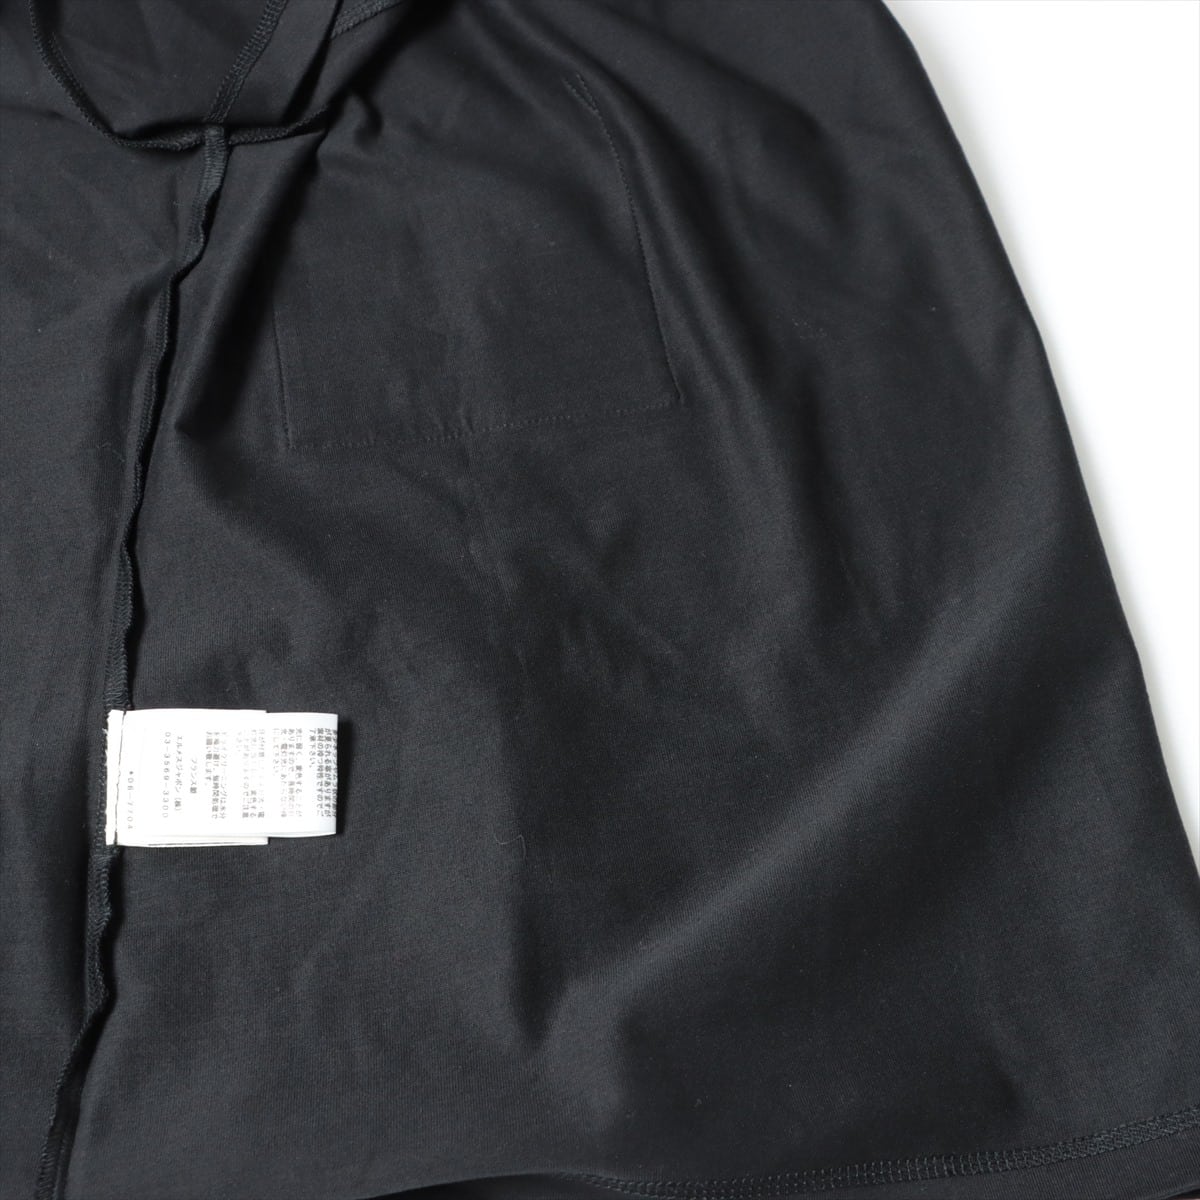 Hermès Chaîne d'Ancre Cotton T-shirt 36 Ladies' Black